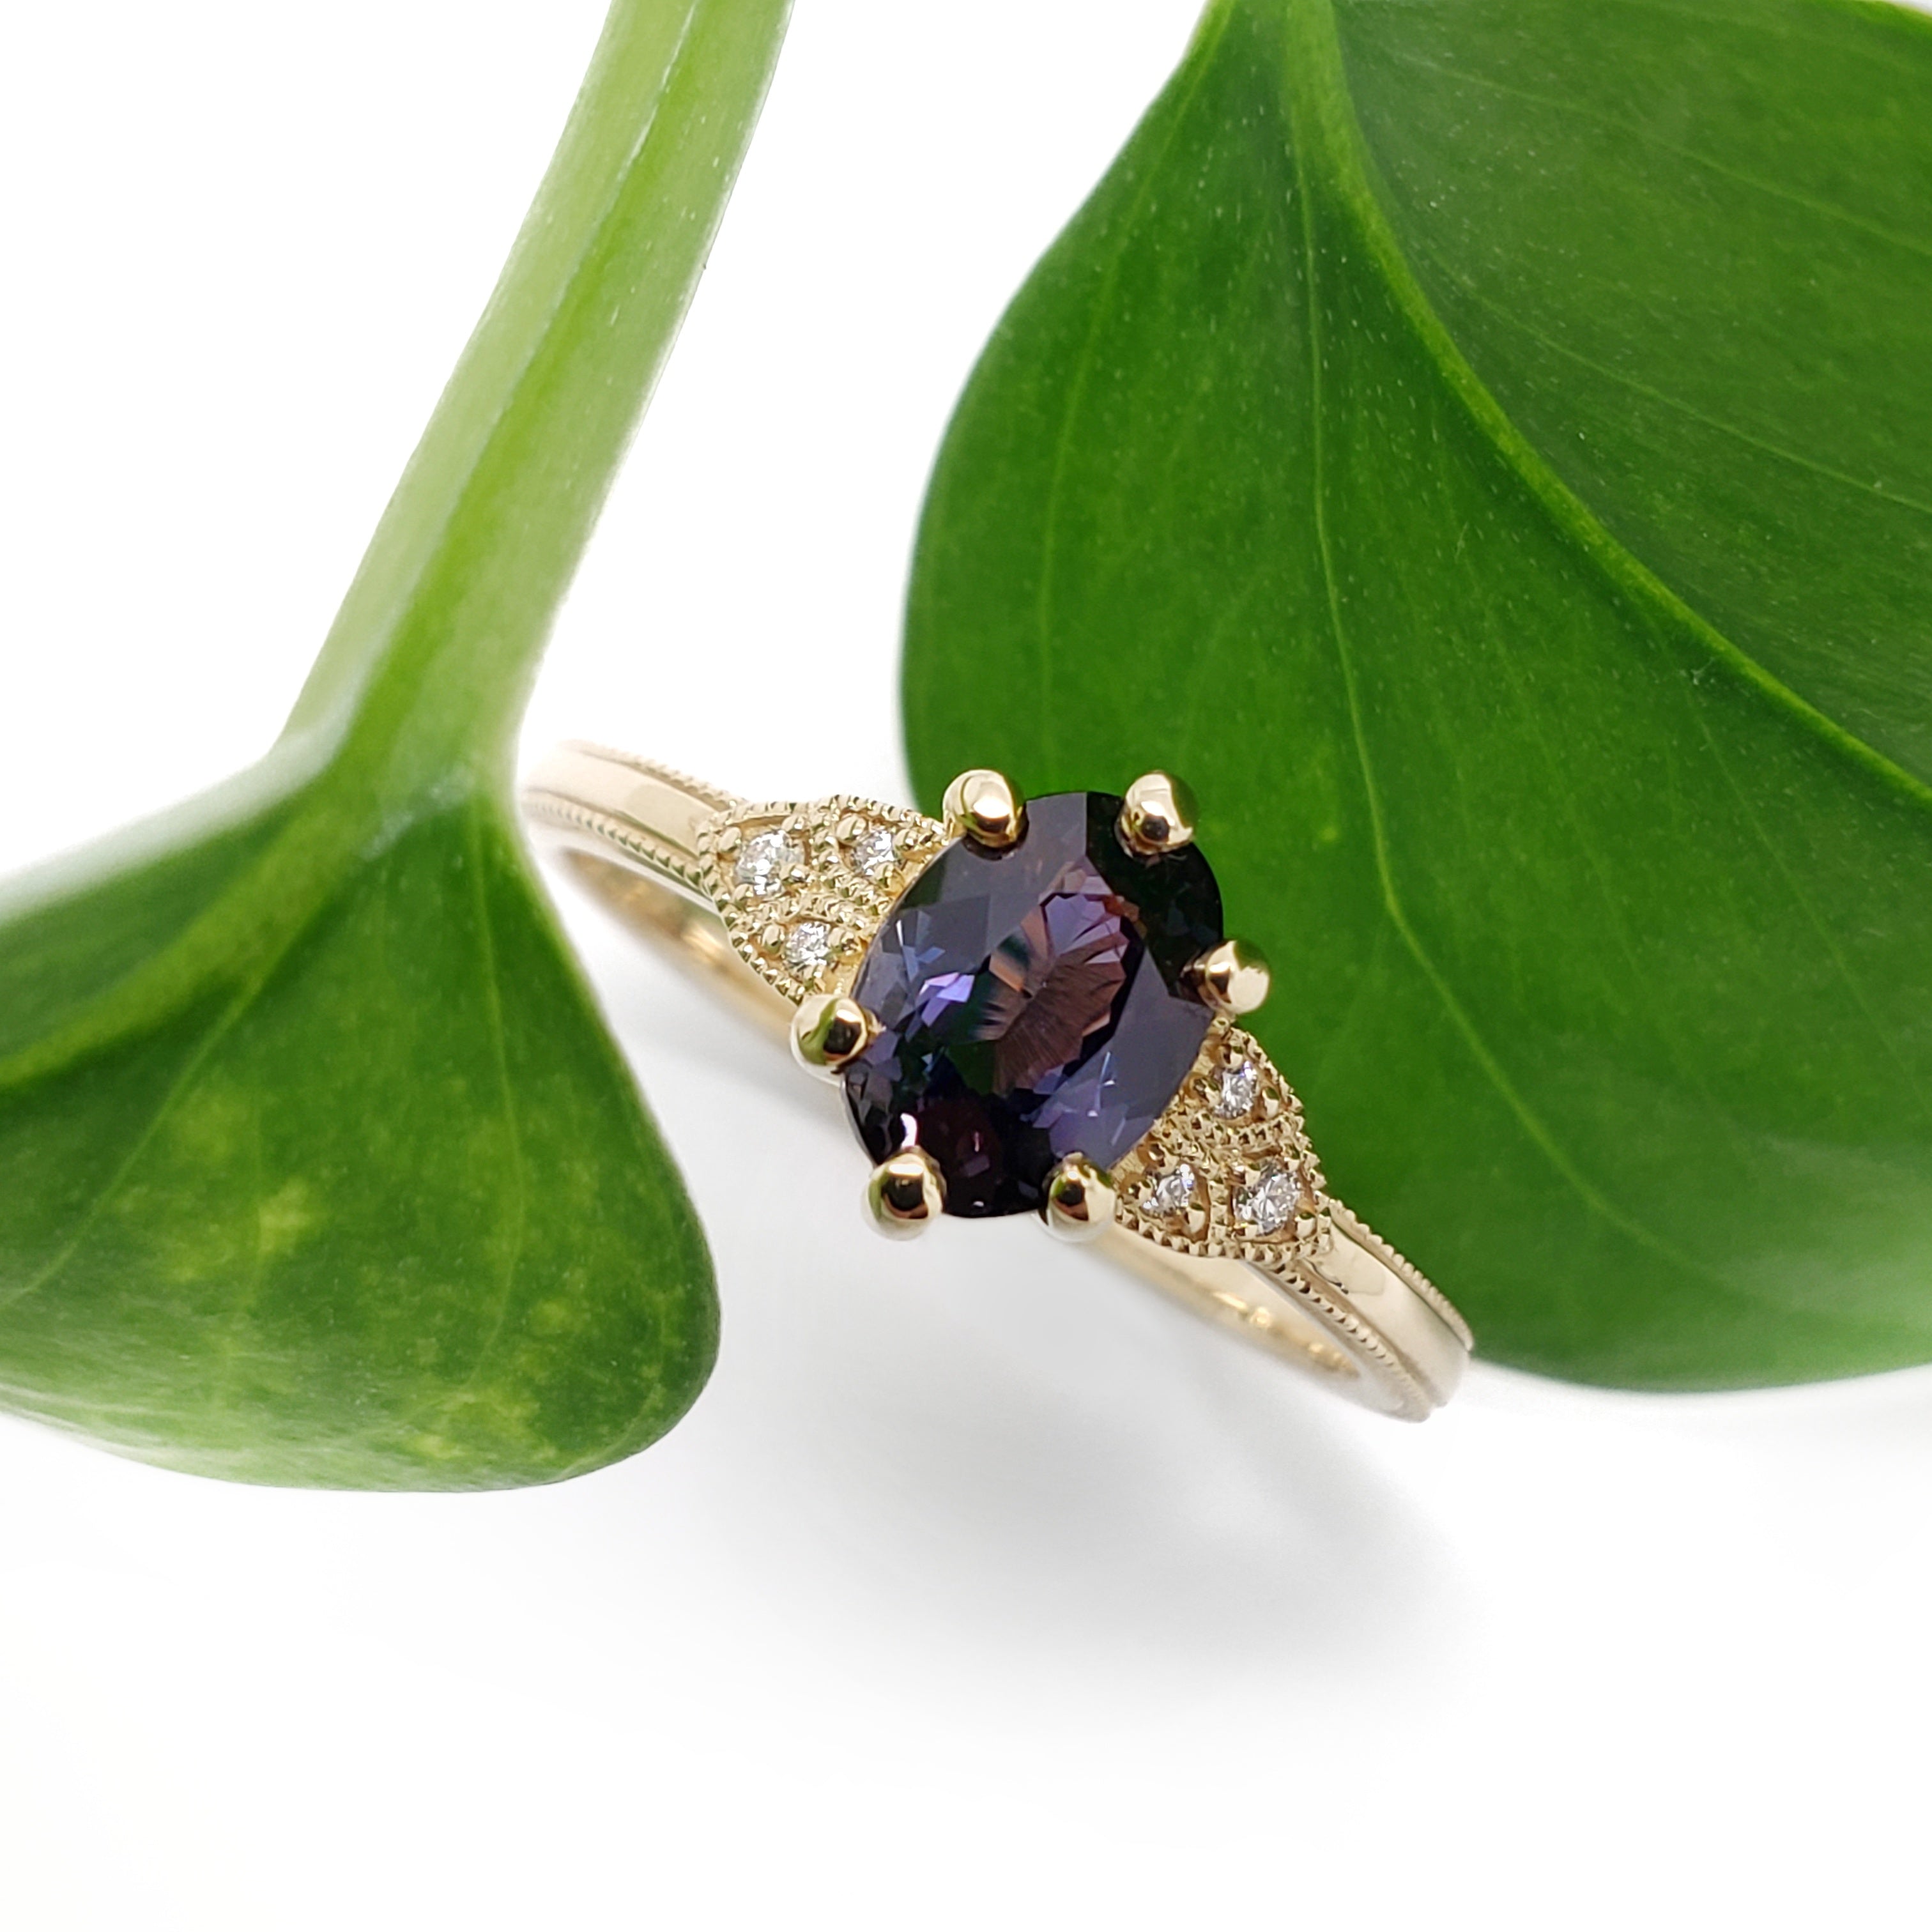 Sapphire Engagement Ring | Era Design Vancouver Canada